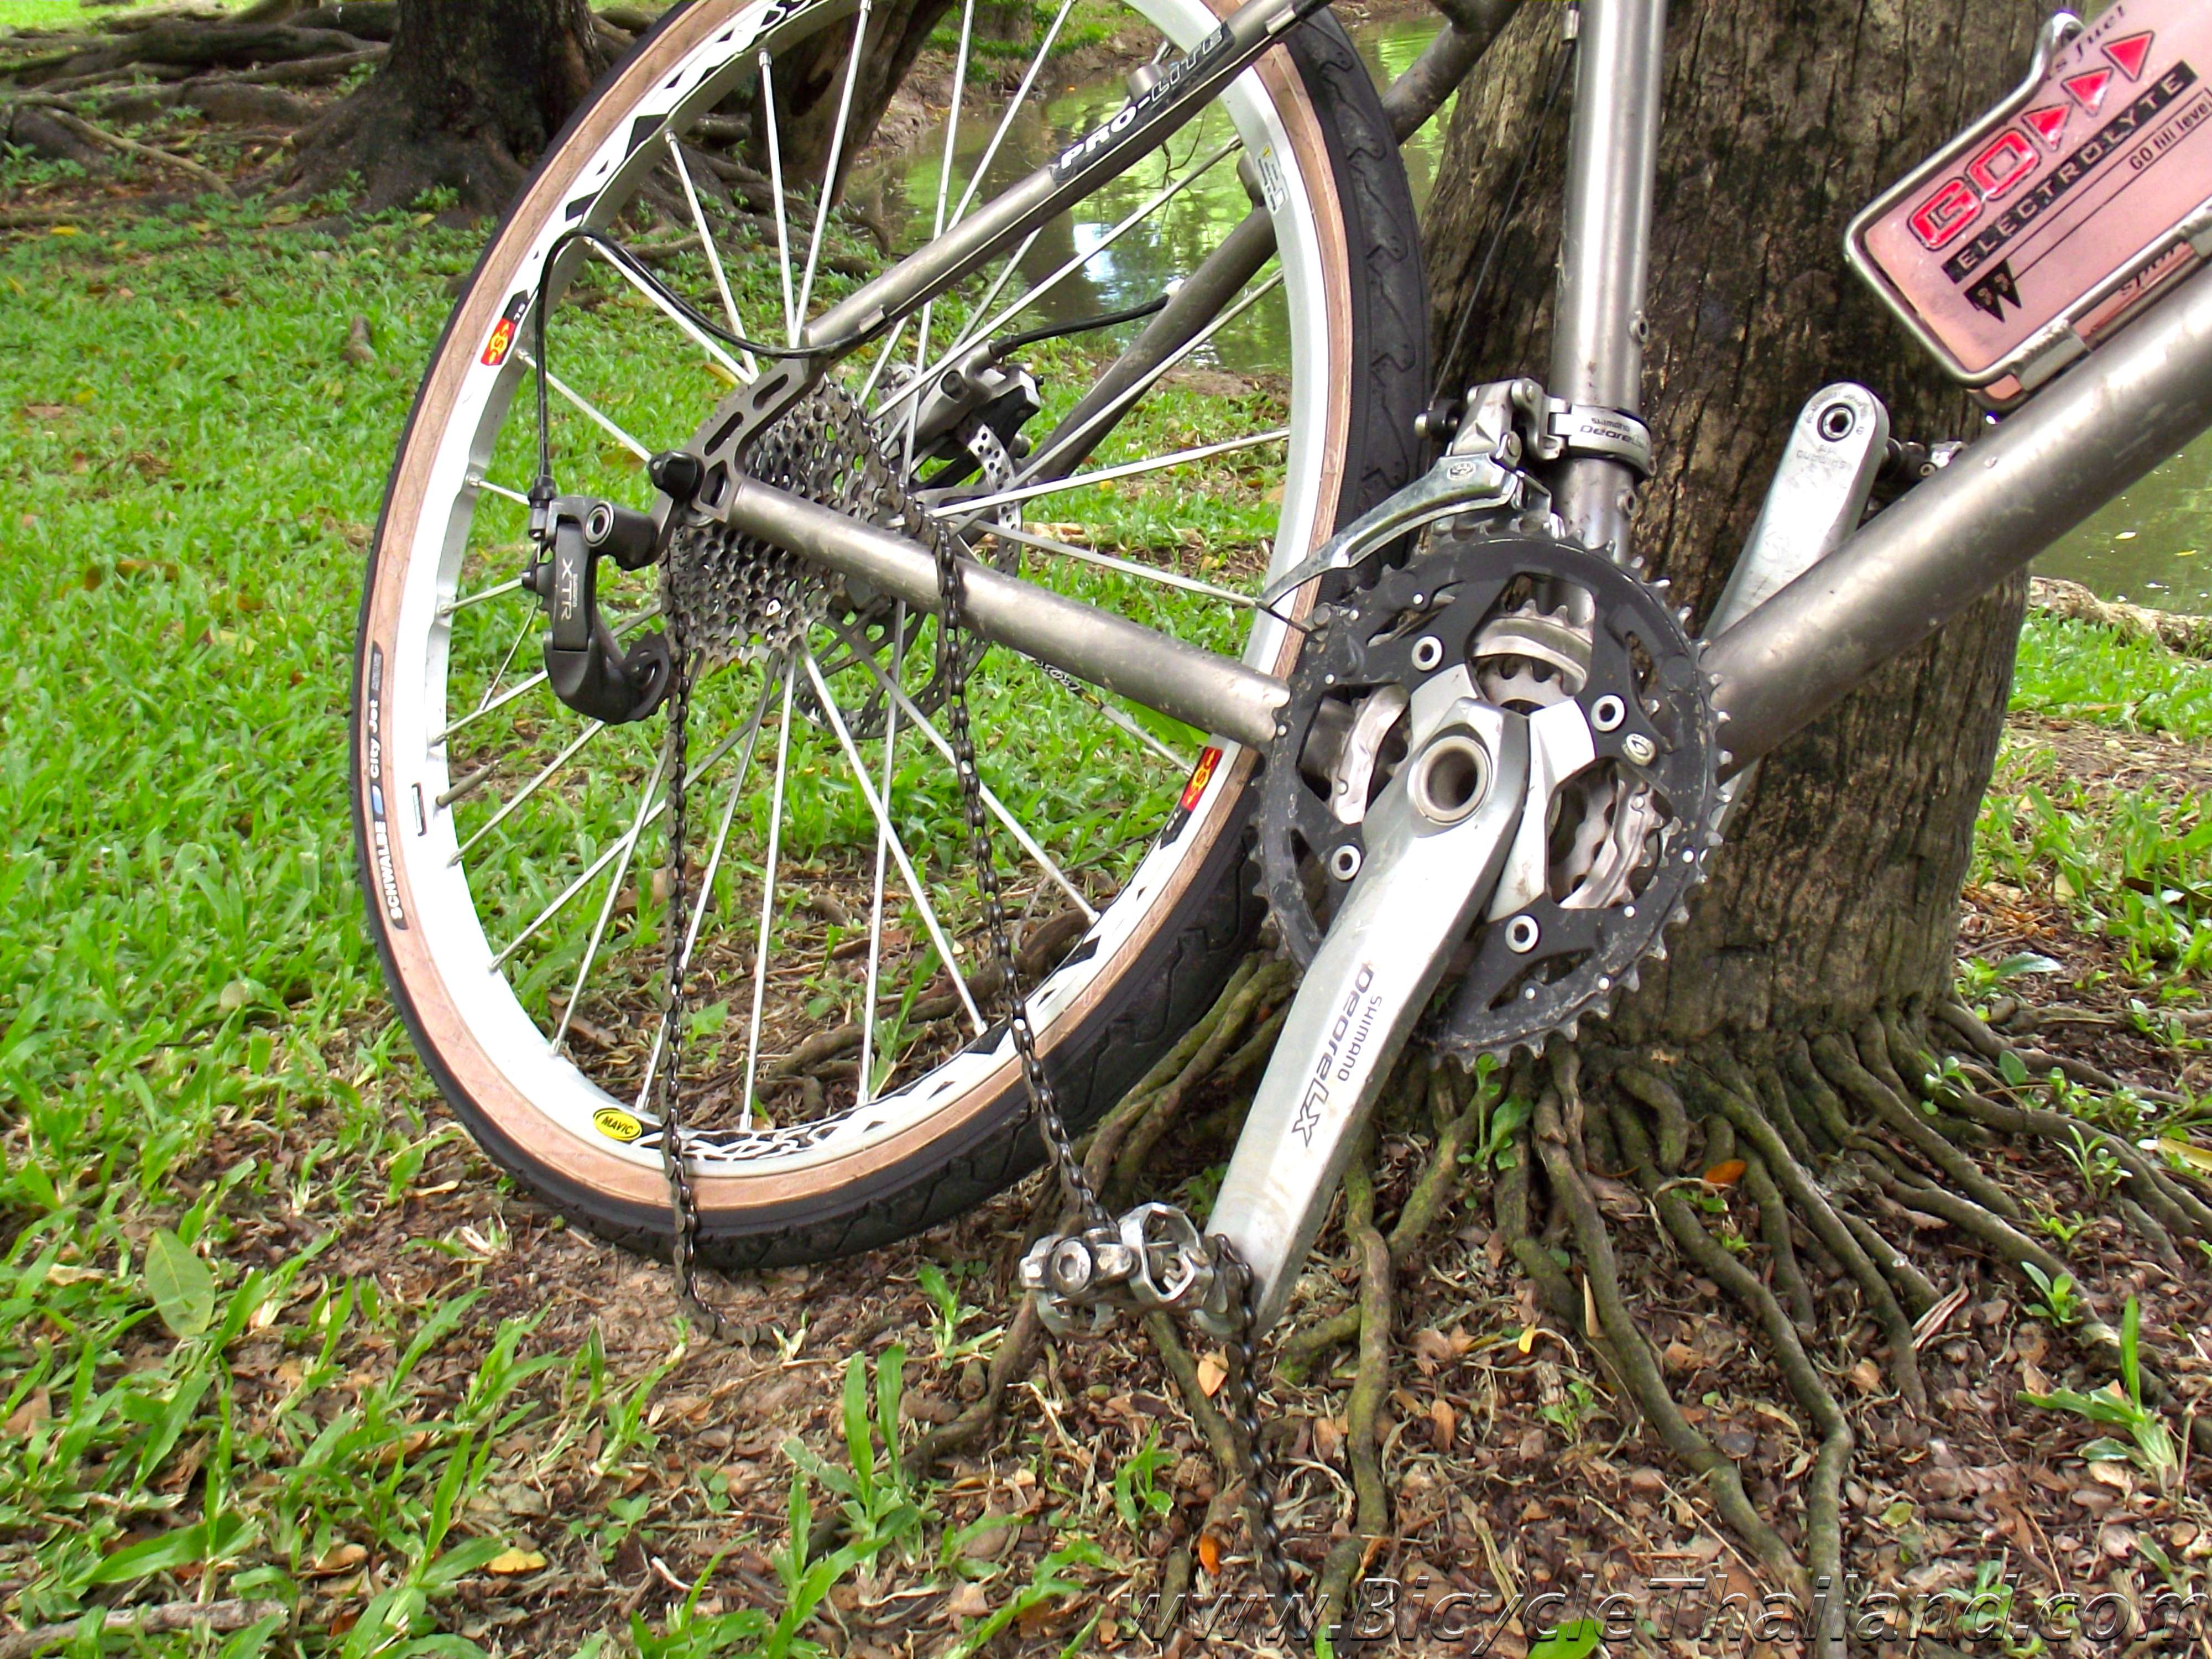 Broke the bike. Corrente велосипед. Велосипед Dr Break 26. Bicycle Chain. Bicycle 1 Chain.